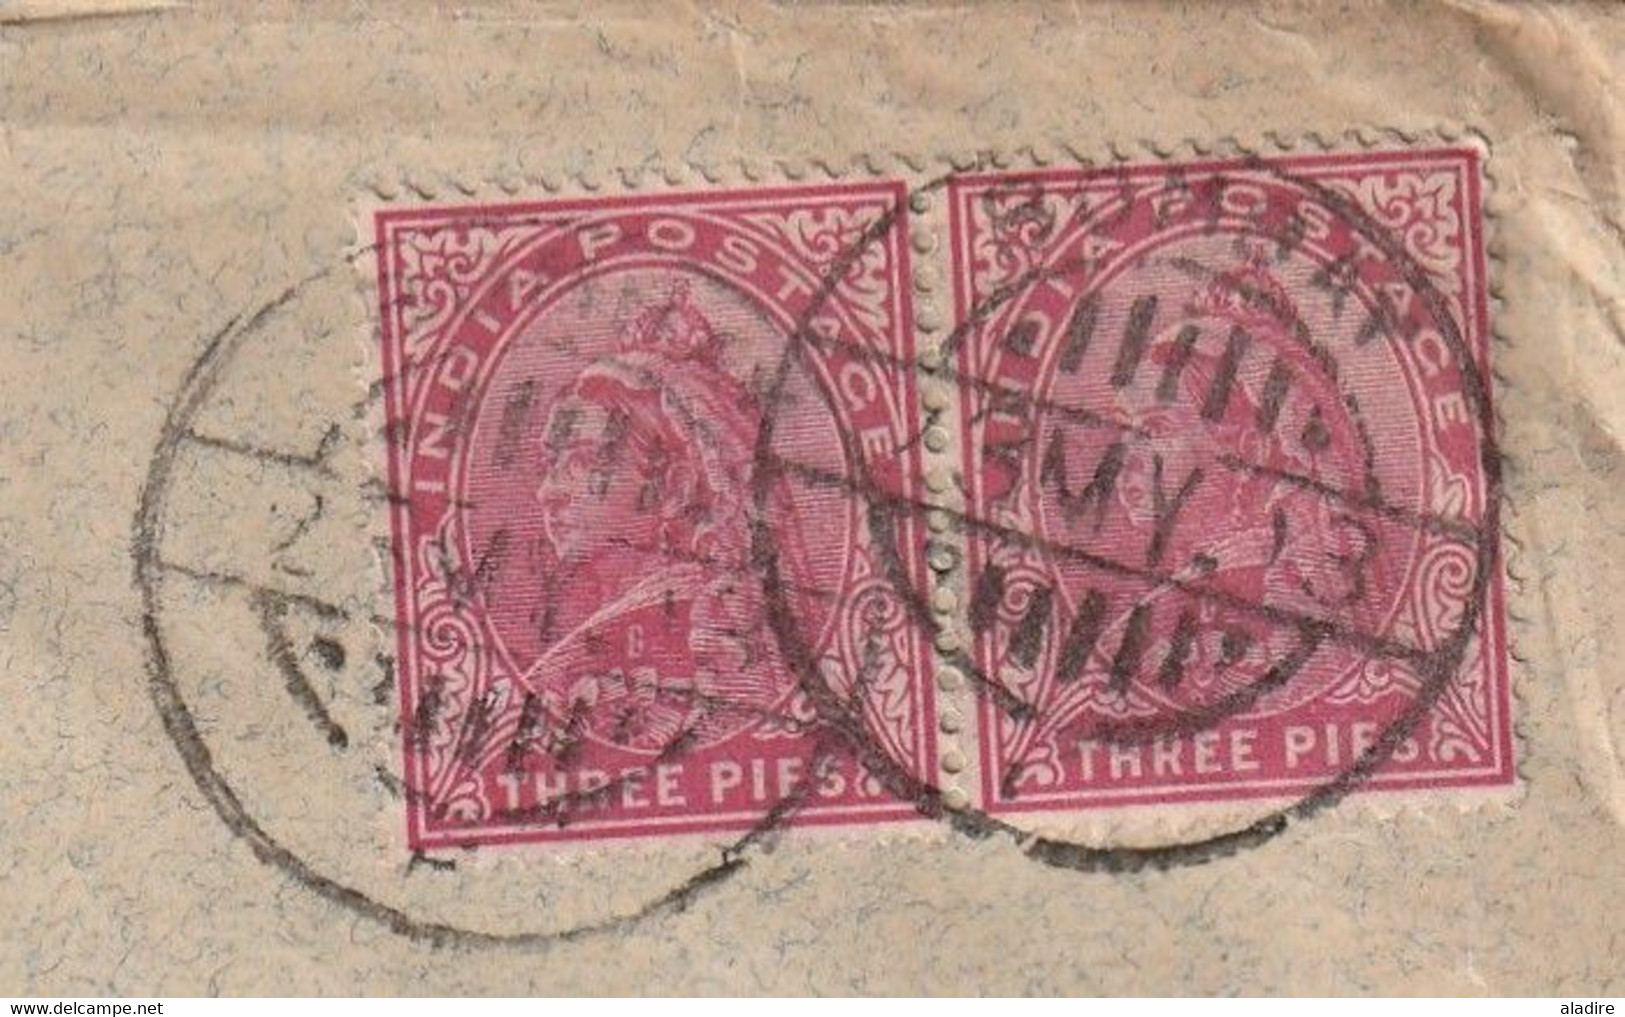 1913 - Enveloppe De BOMBAY Mumbai, Inde, GB Vers PARIS, France - PER BOOK POST - 6 Pies - 2 X 3 Victoria Stamps - 1911-35 King George V